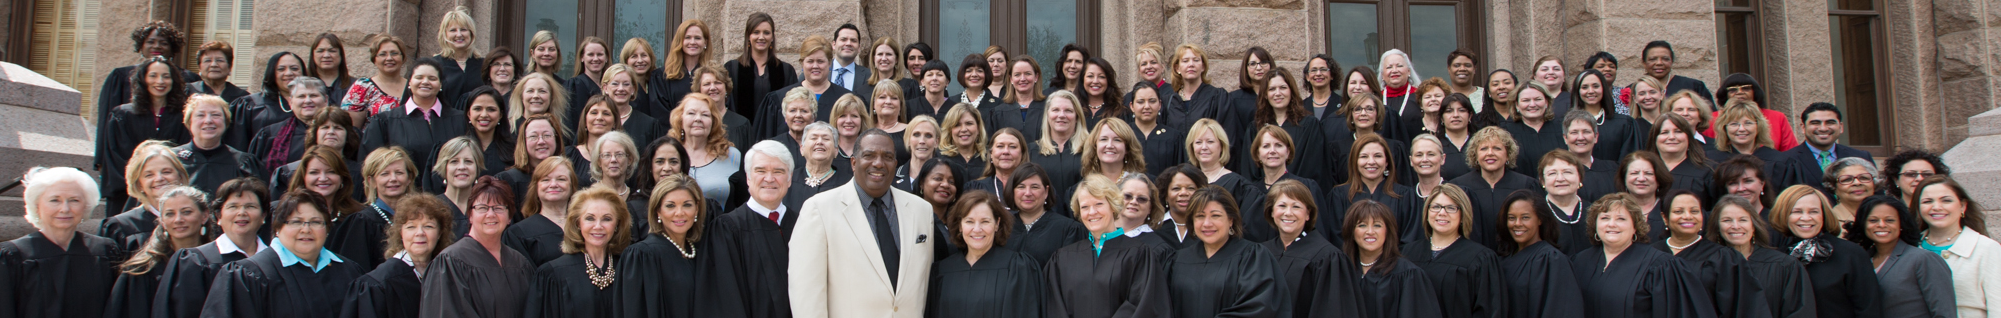 Female Judges Day 2015 Group Photo